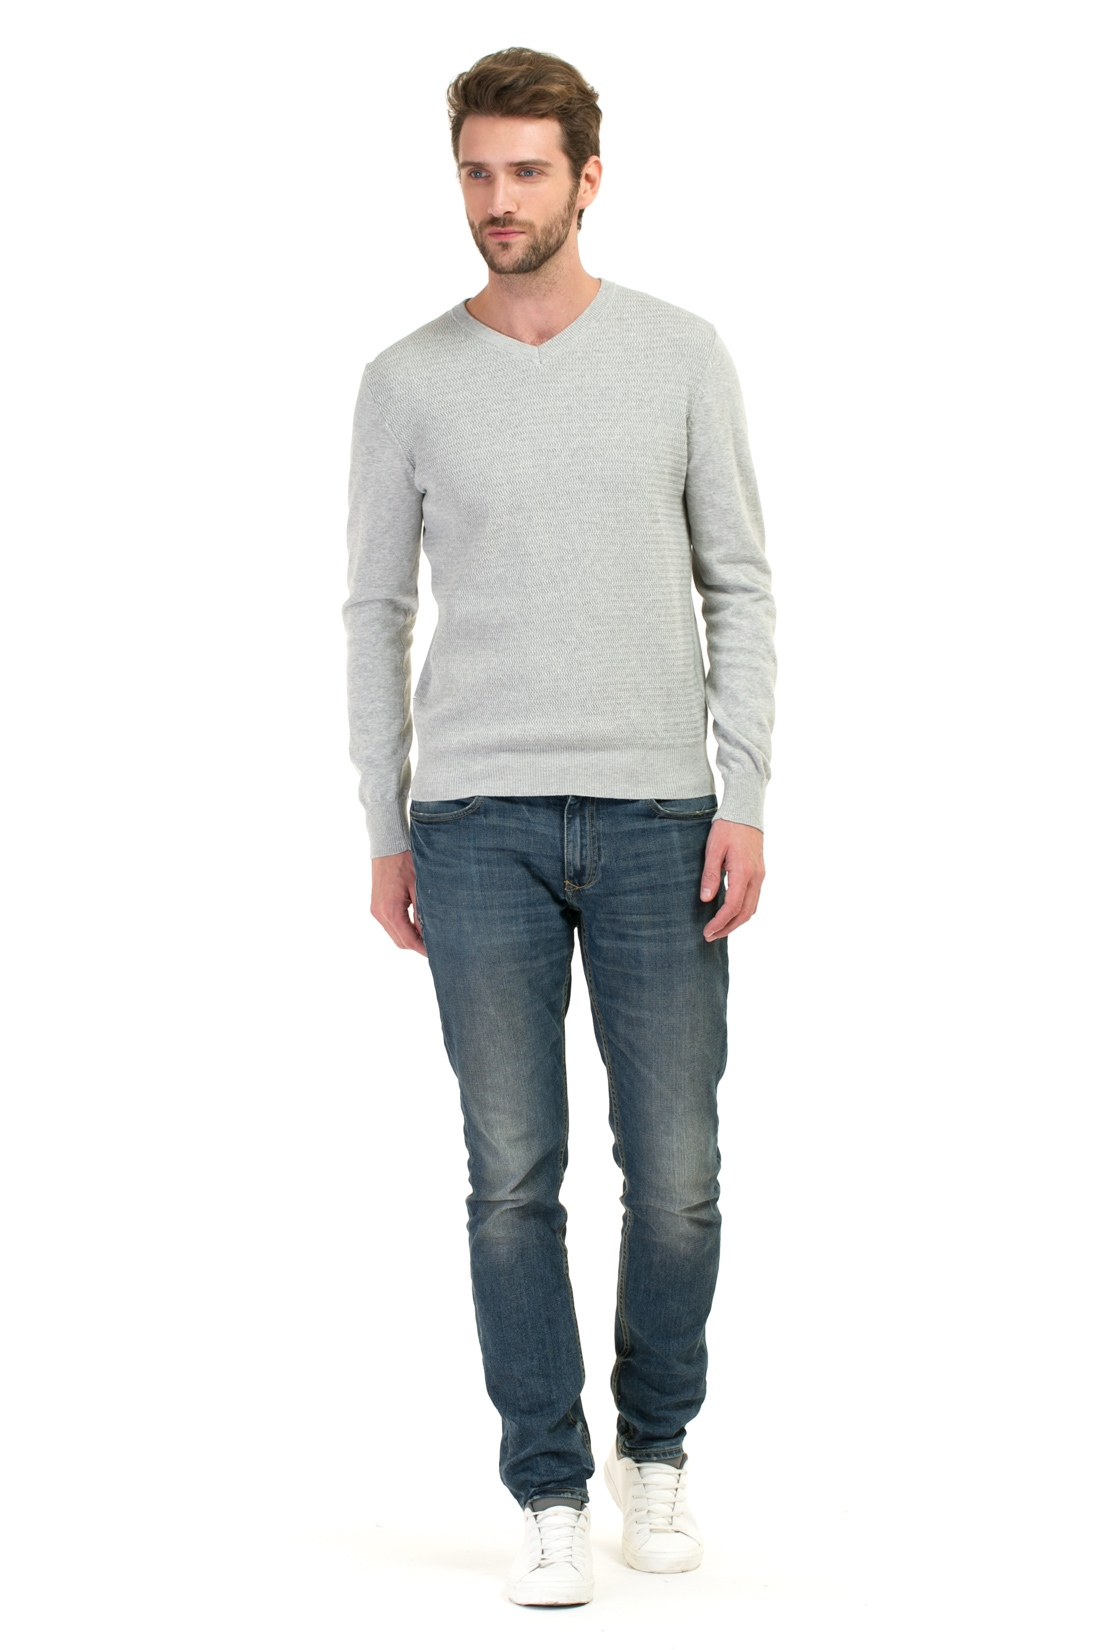 Пуловер с рельефным узором (арт. baon B637016), размер XXL, цвет silver melange#серый Пуловер с рельефным узором (арт. baon B637016) - фото 3